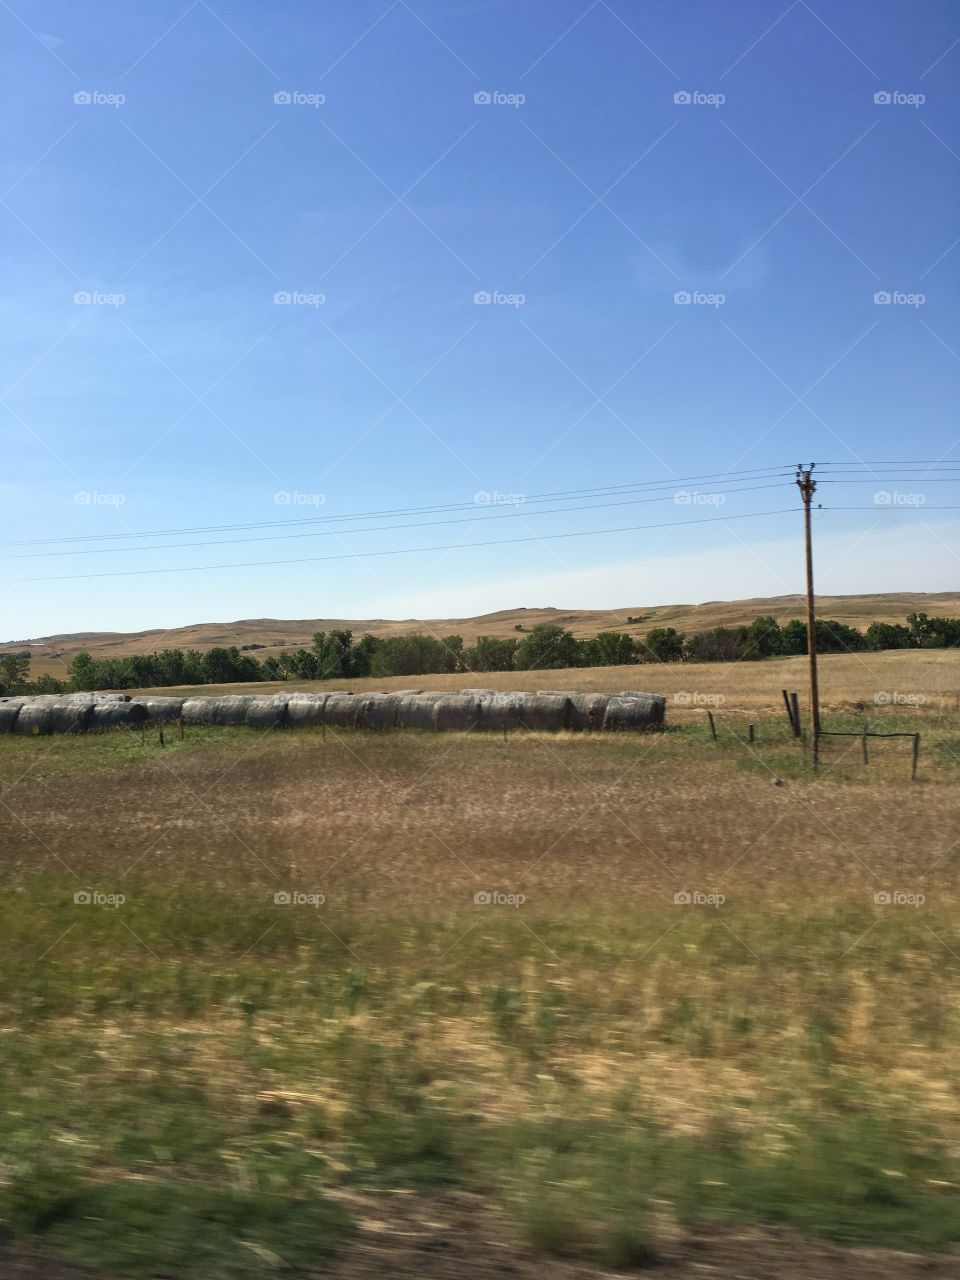 North Dakota field. 